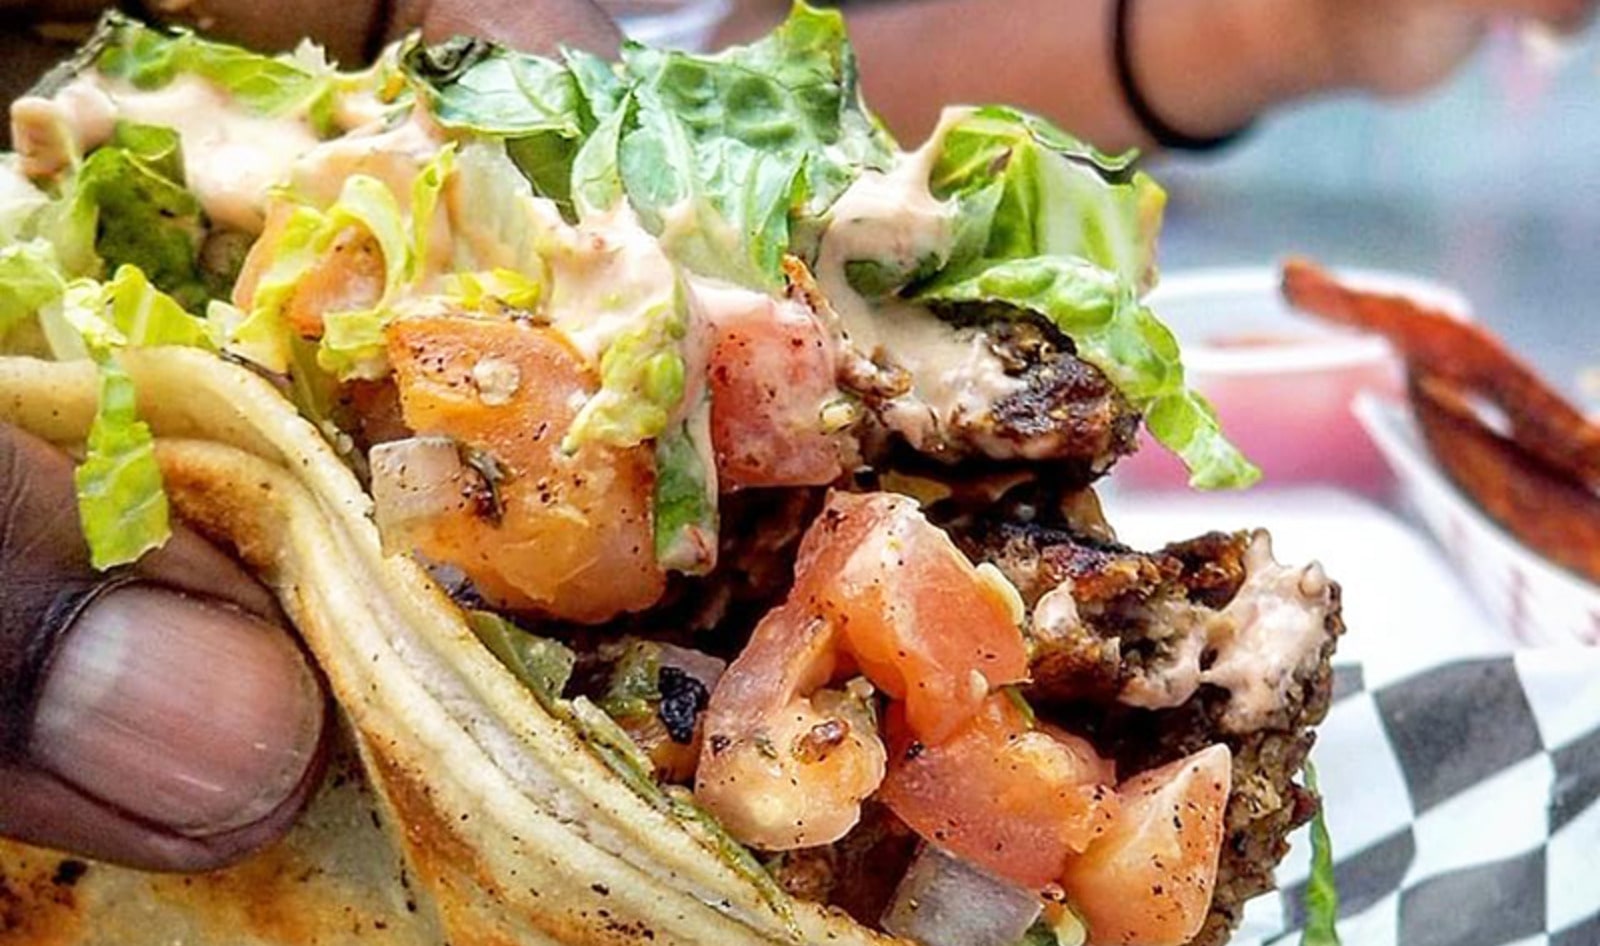 Panamanian Vegan Food Truck Hits the Streets of Texas